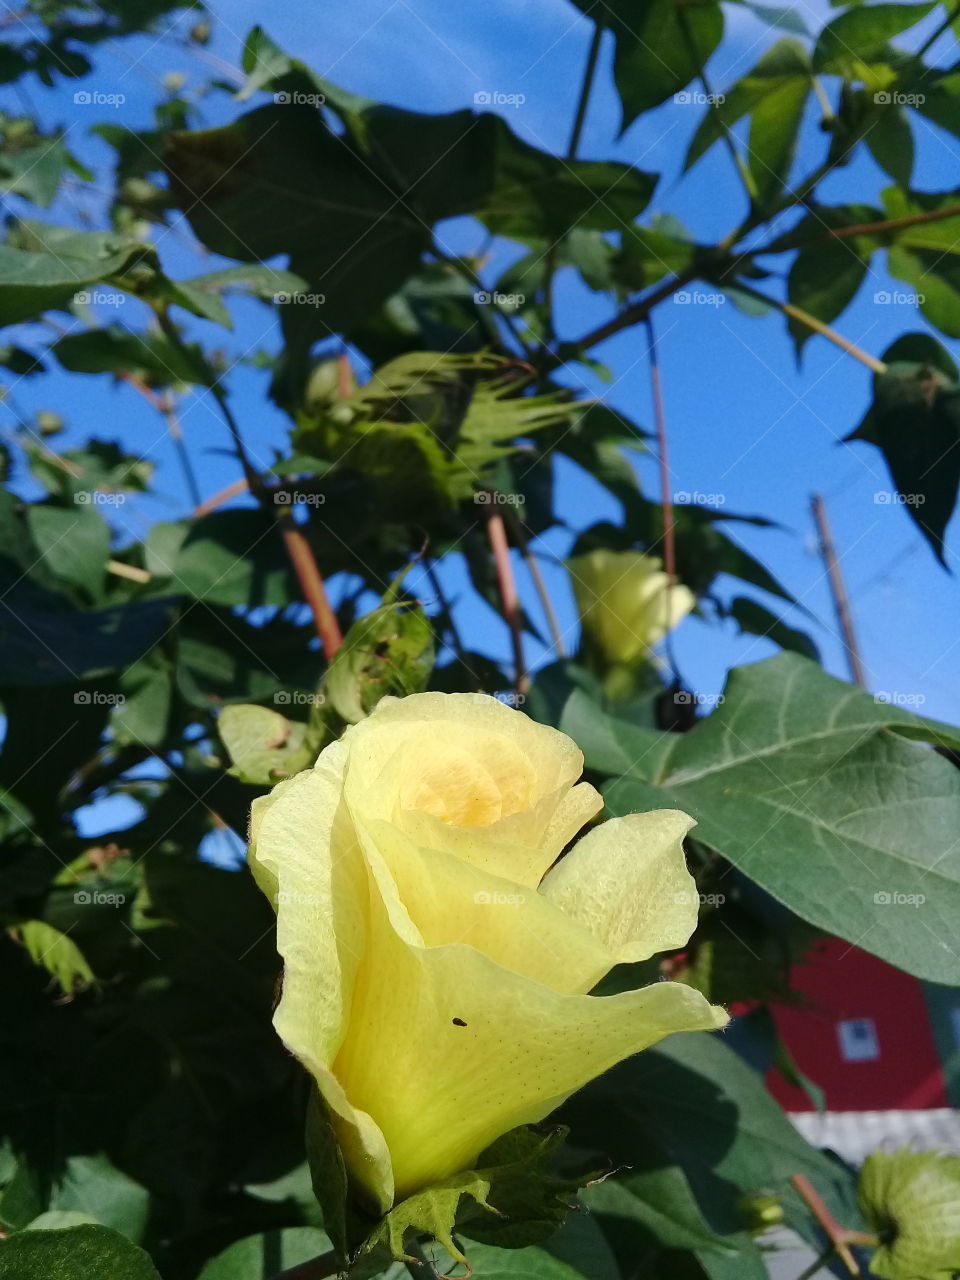 Flower of Para cotton tree. Hibiscus
 Cotton tree